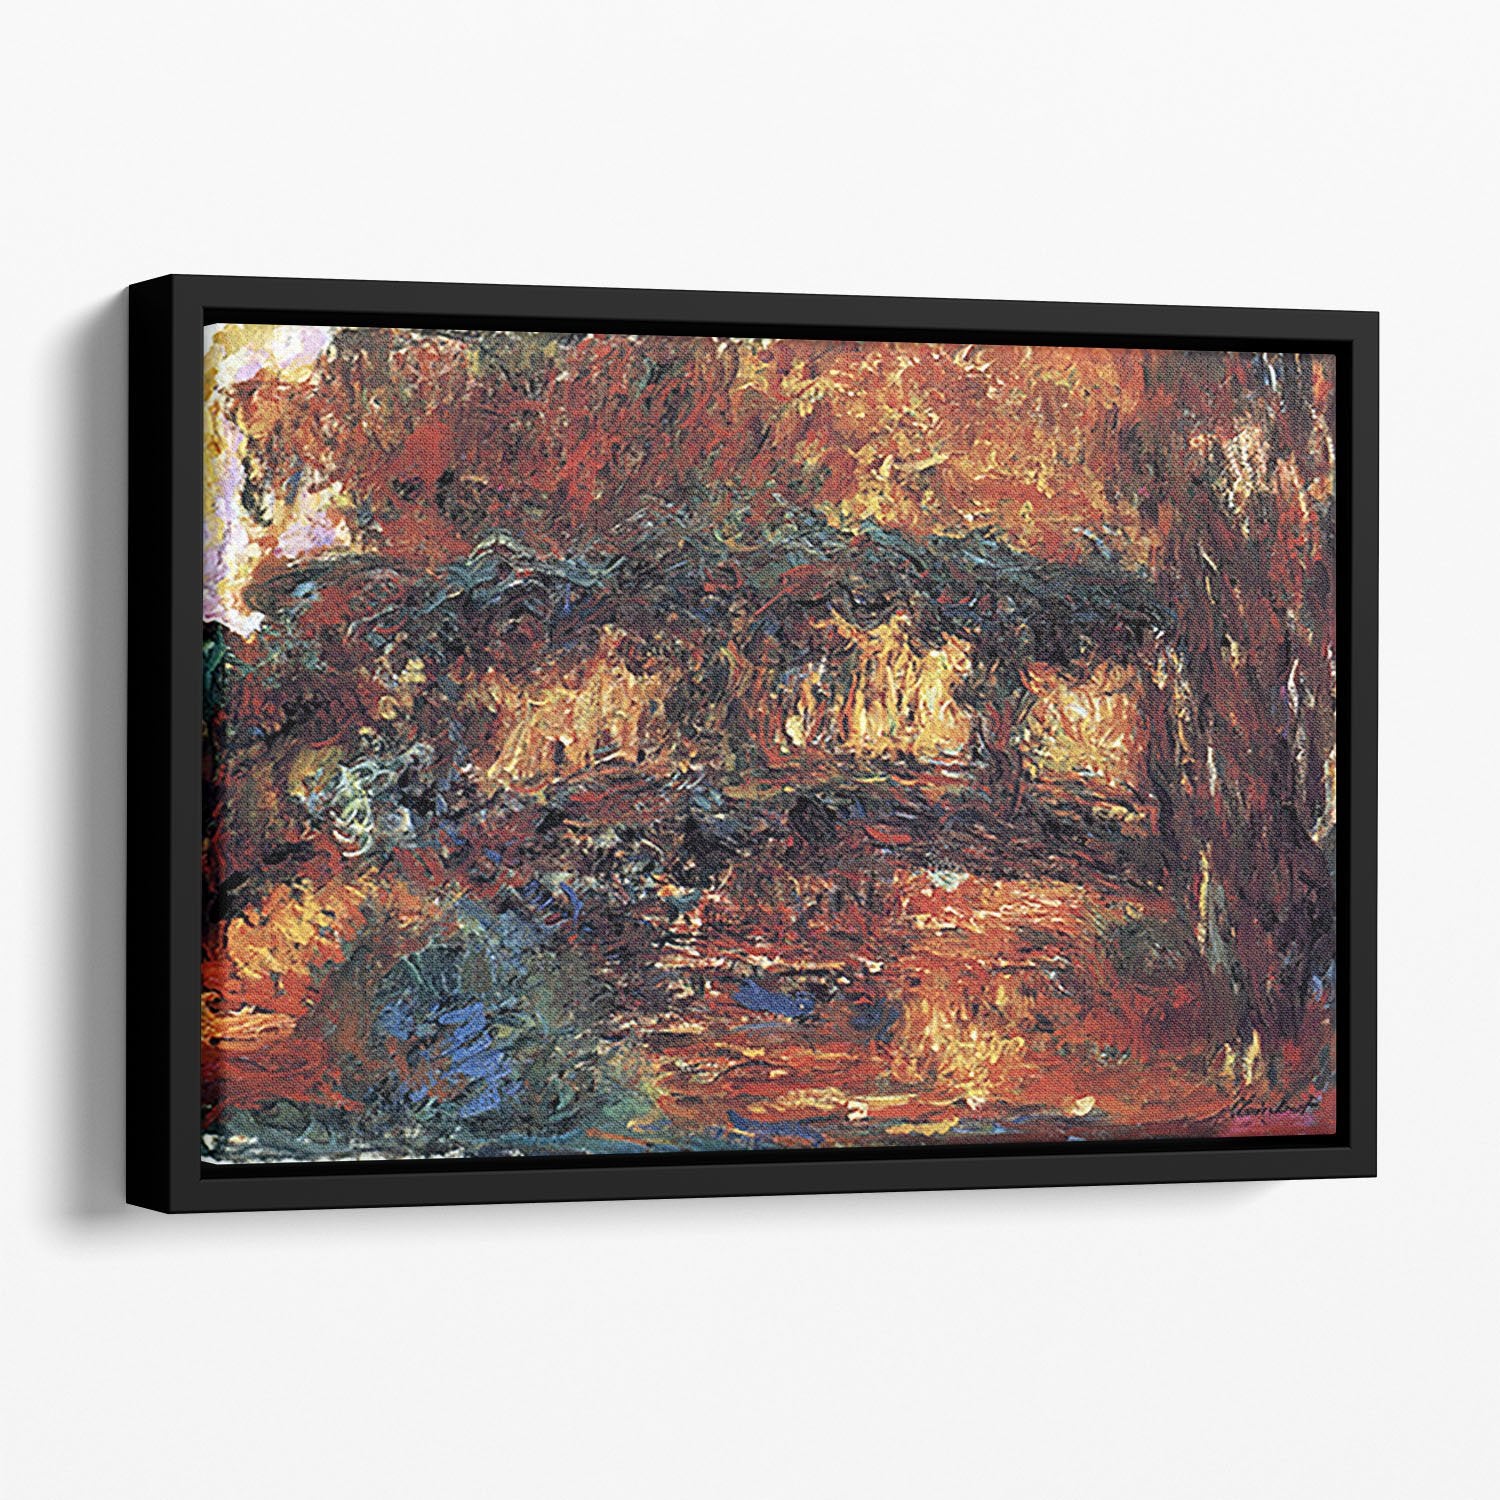 The Japanese Bridge 2 by Monet Floating Framed Canvas